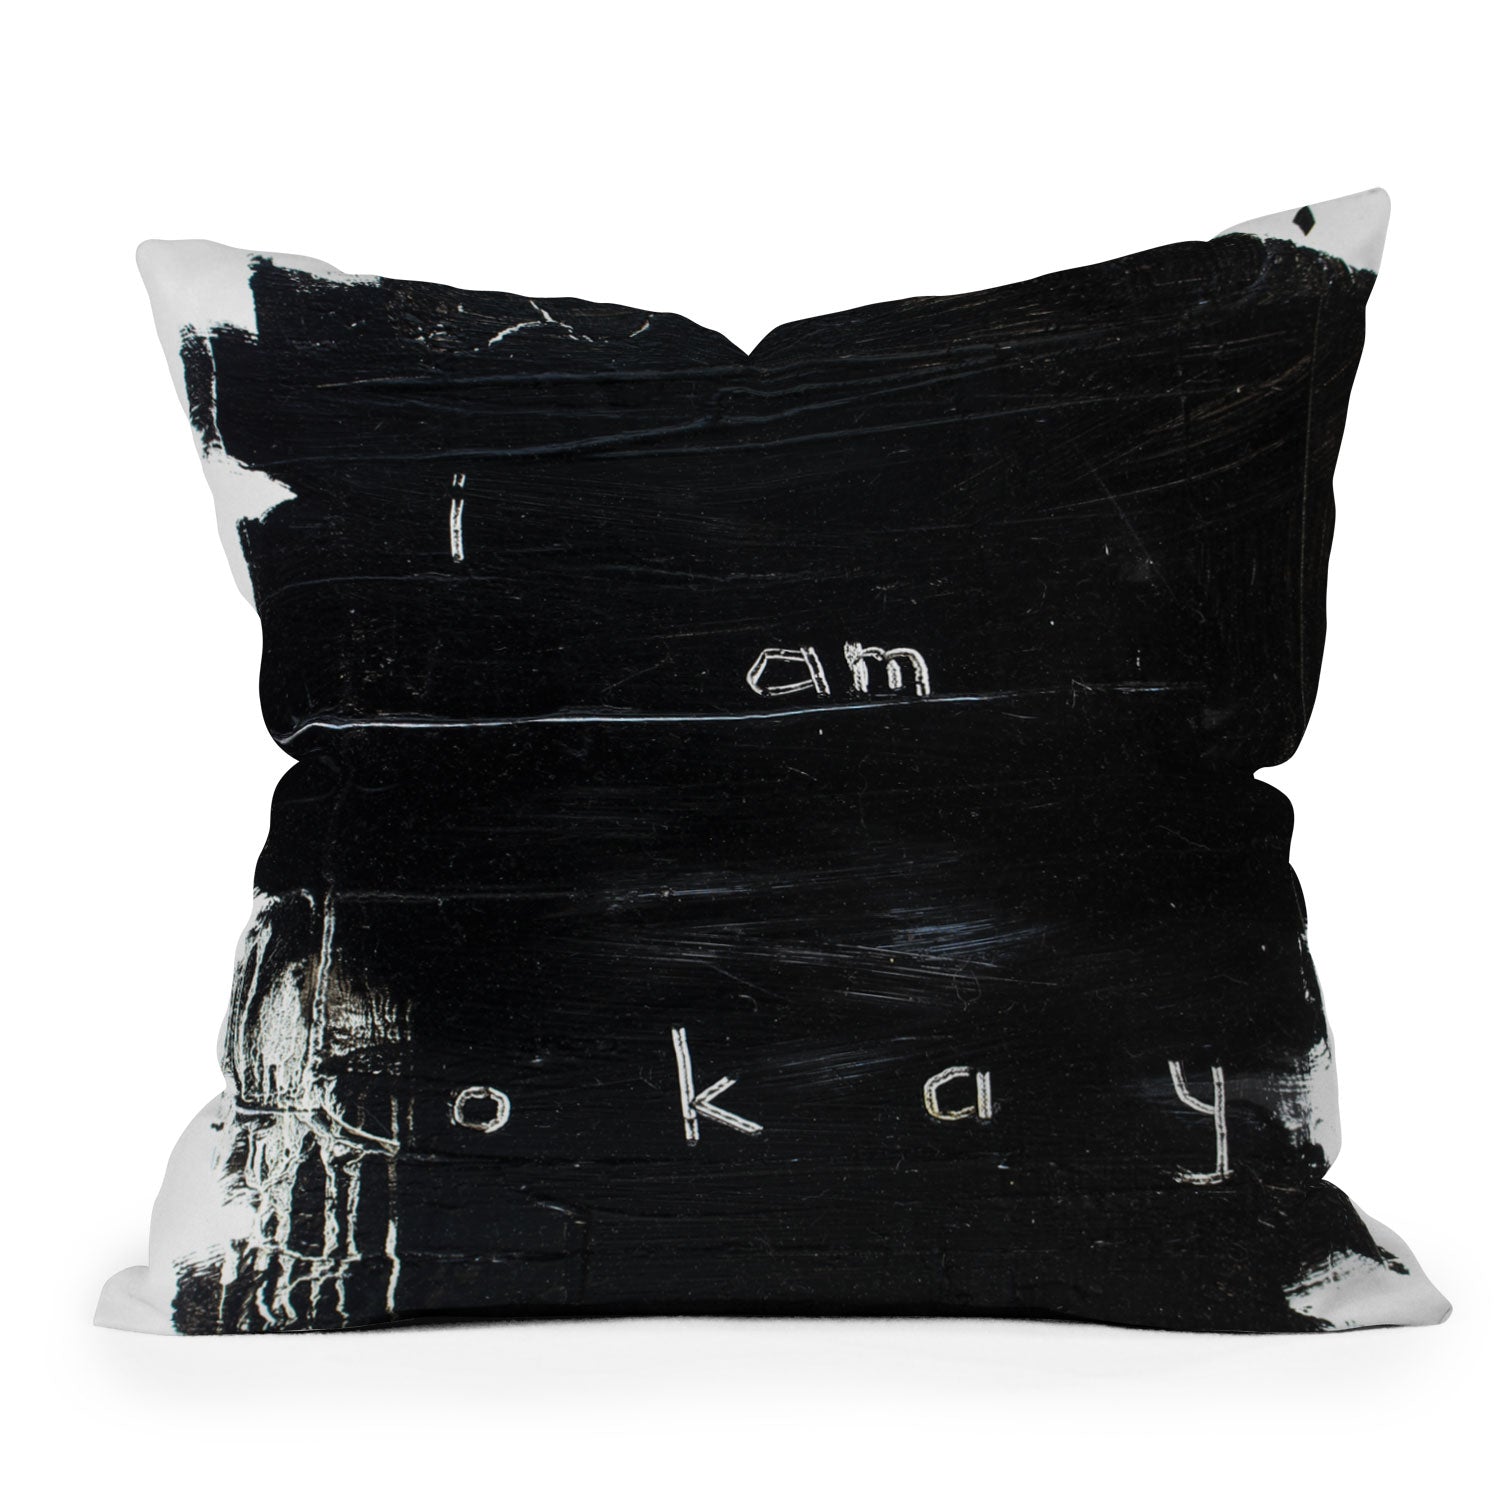 "i am okay" throw pillow